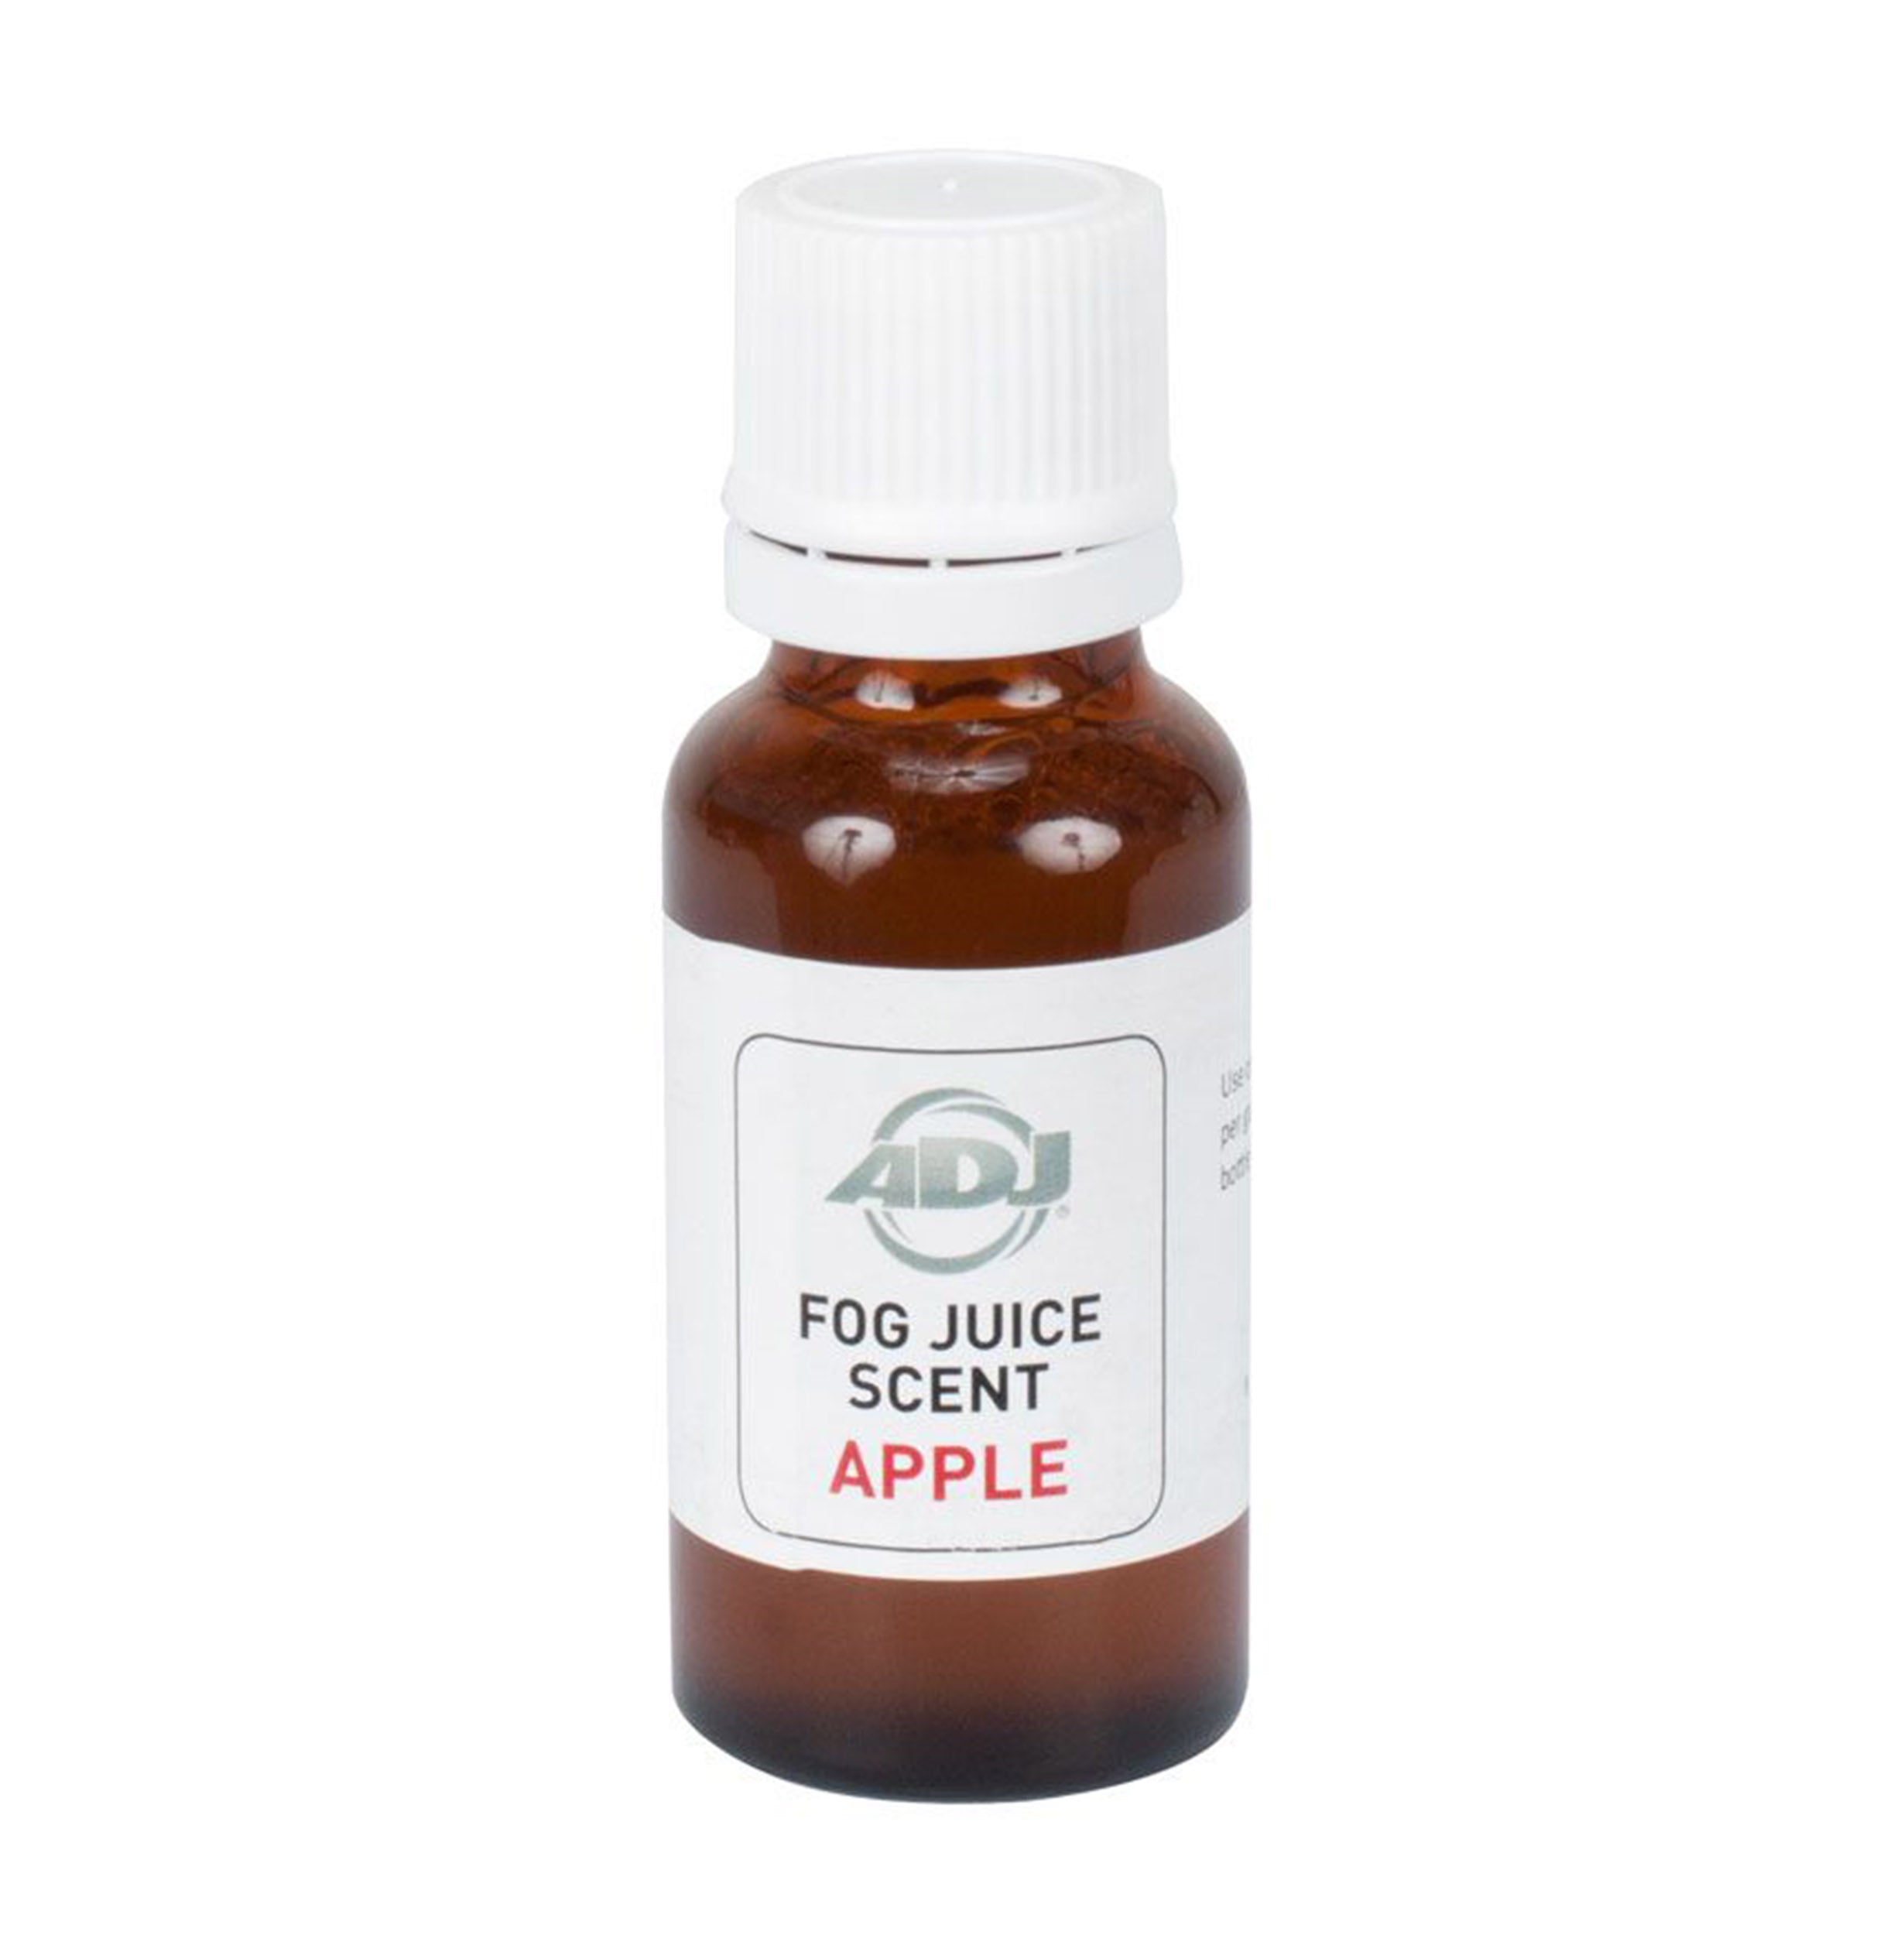 ADJ F-SCENT/AP, Fog Juice Scent - Apple by ADJ